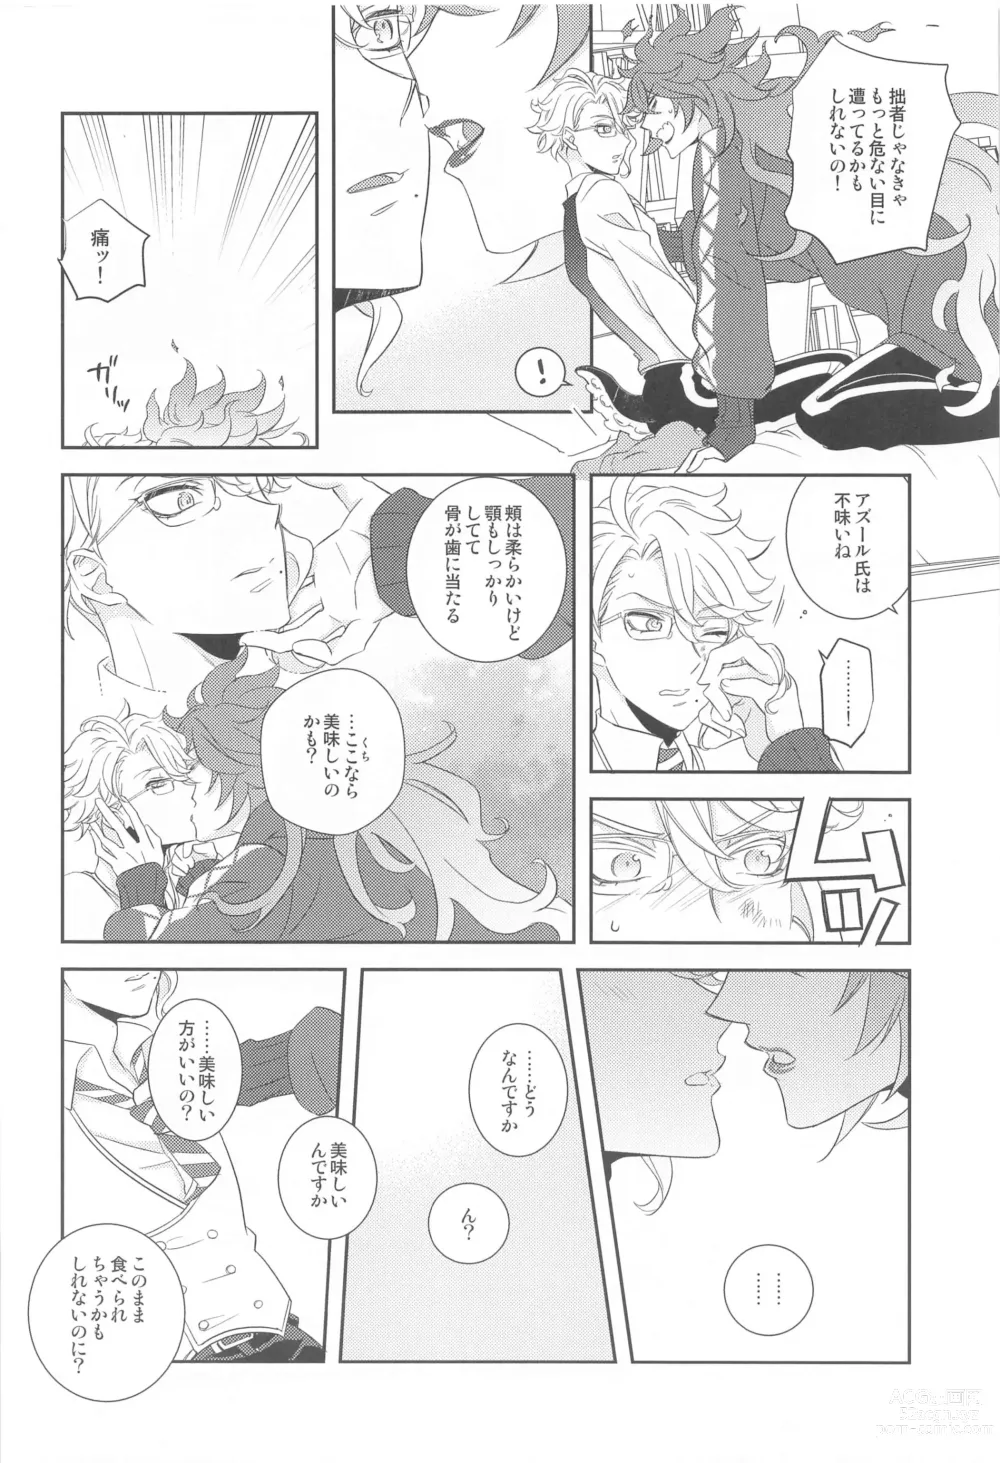 Page 19 of doujinshi Tail!